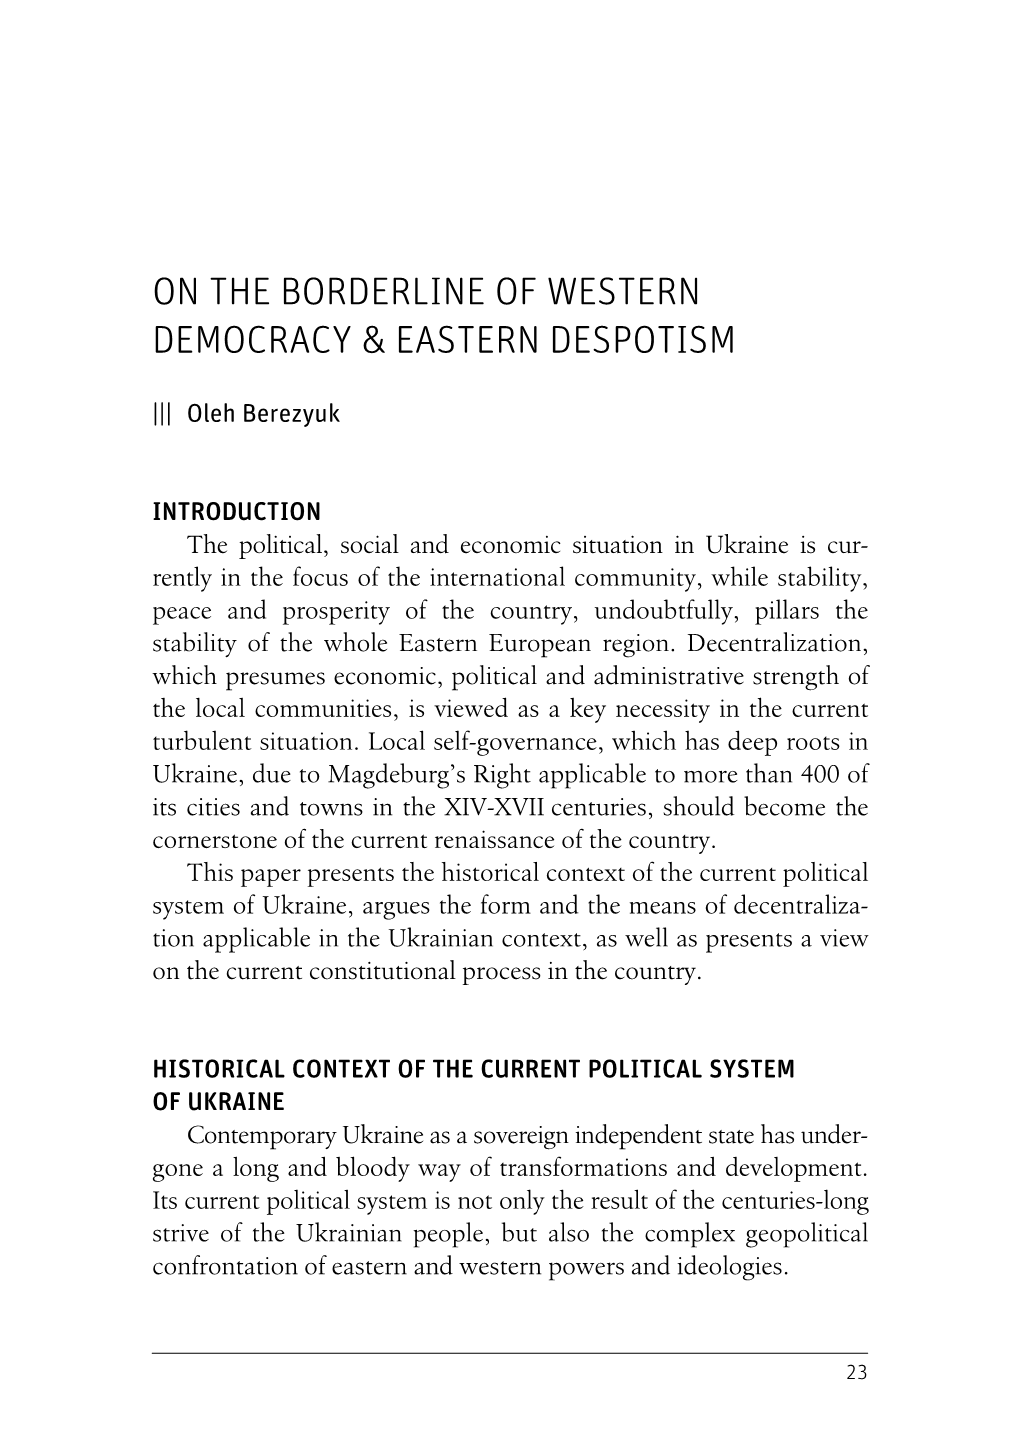 On the Borderline of Western Democracy & Eastern